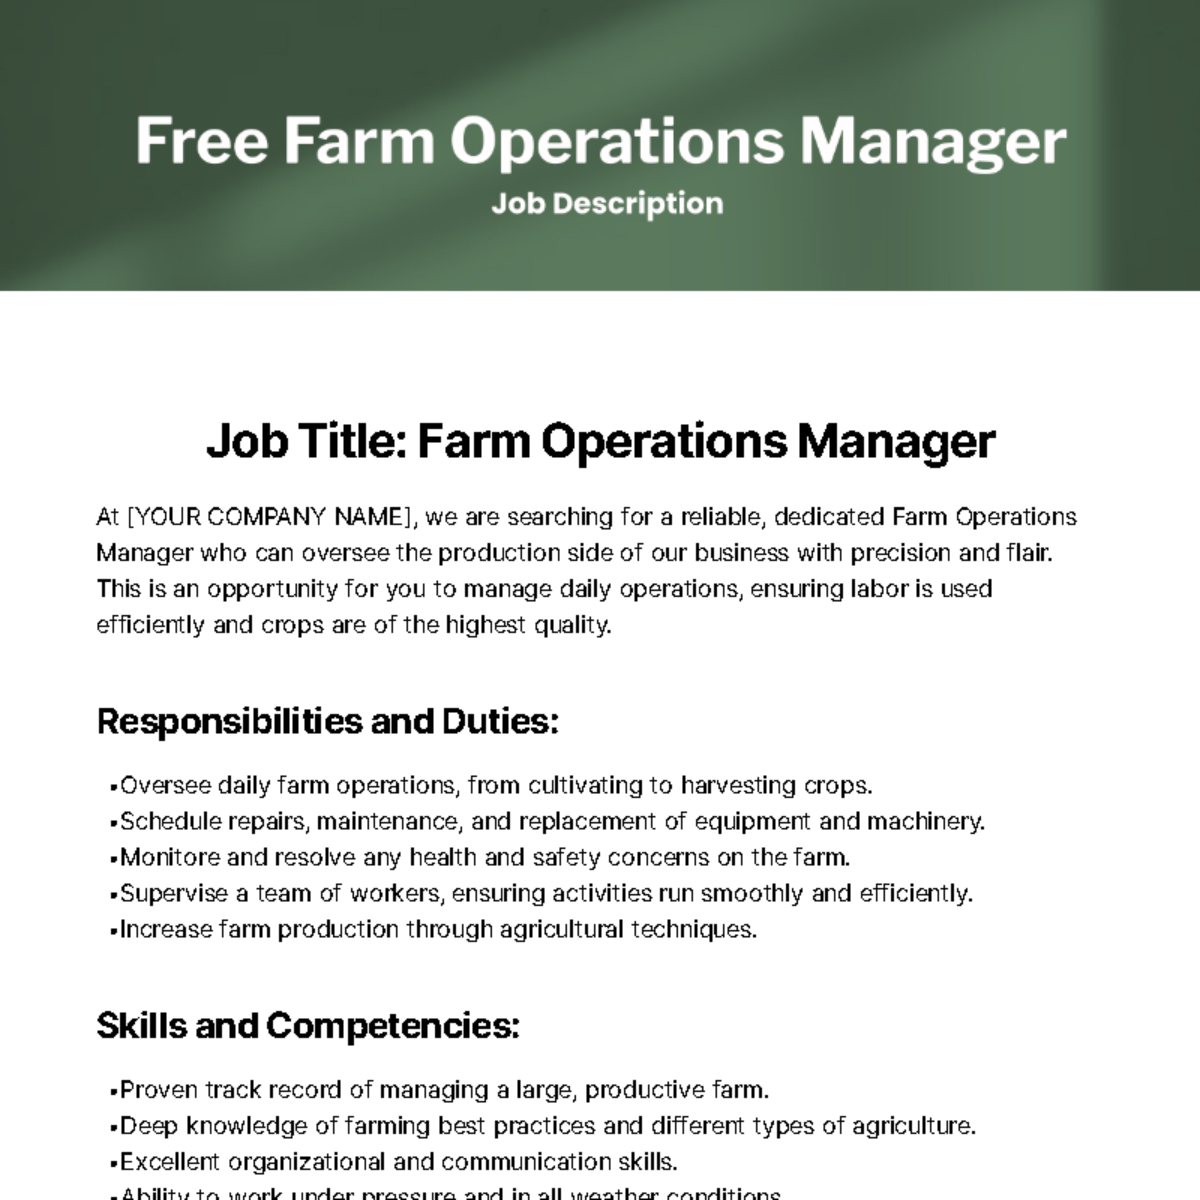 Free Farm Operations Manager Job Description Template